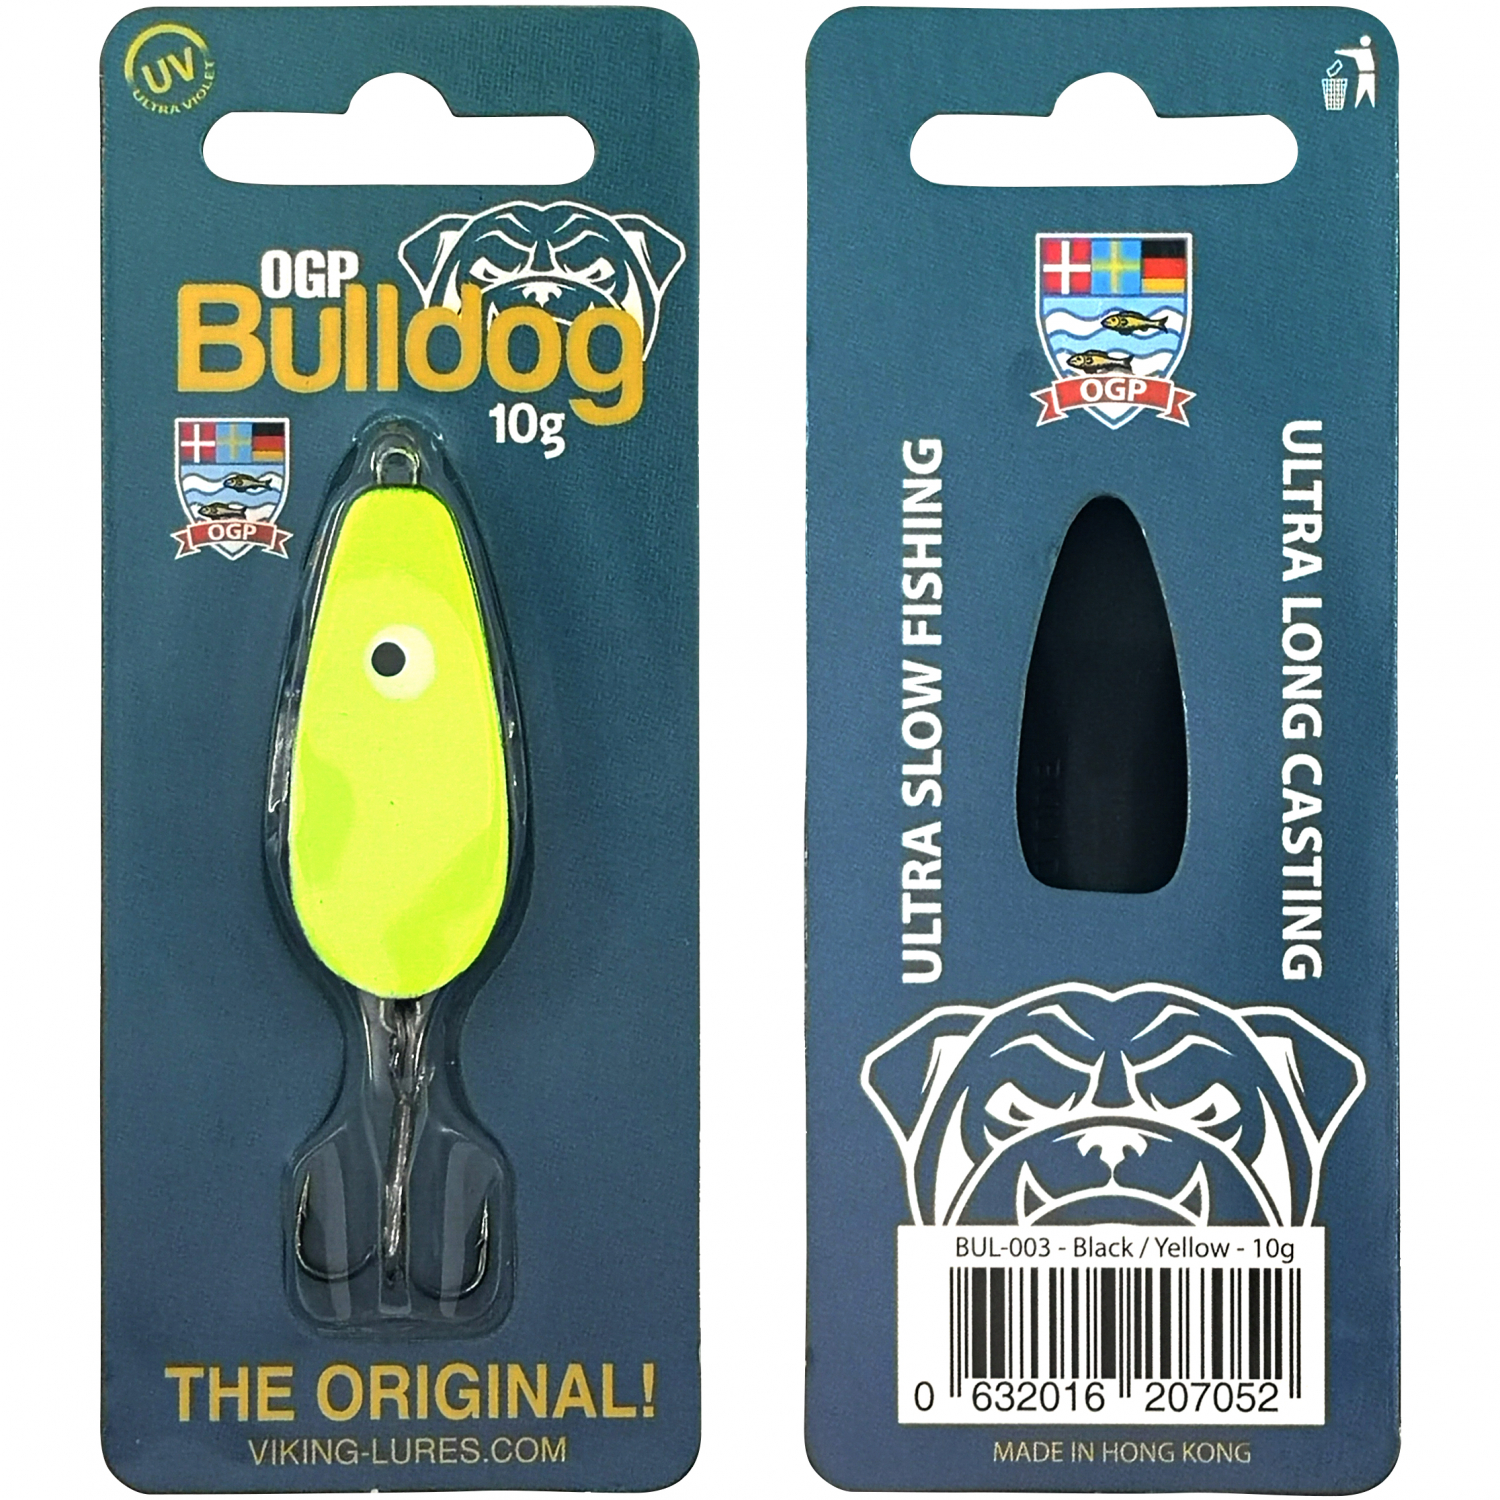 OGP Spoon Bulldog (Black / Yellow) 